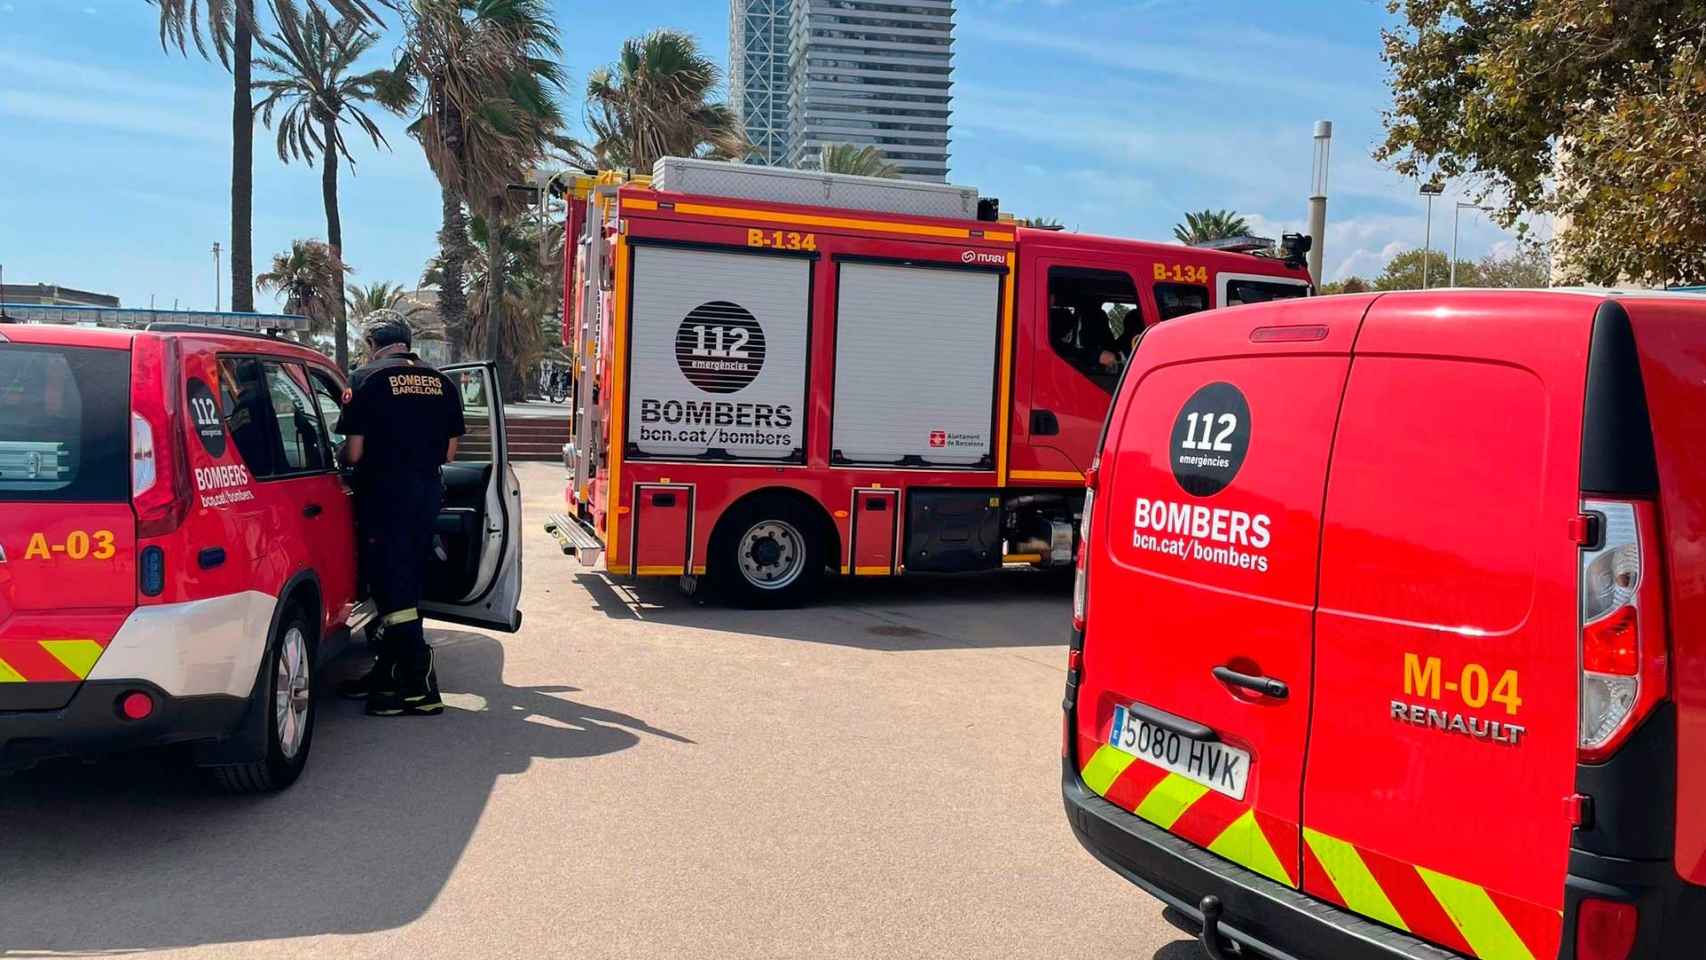 Bombers de la Generalitat, como los que han asistido al incendio en El Prat de Llobregat / EUROPA PRESS